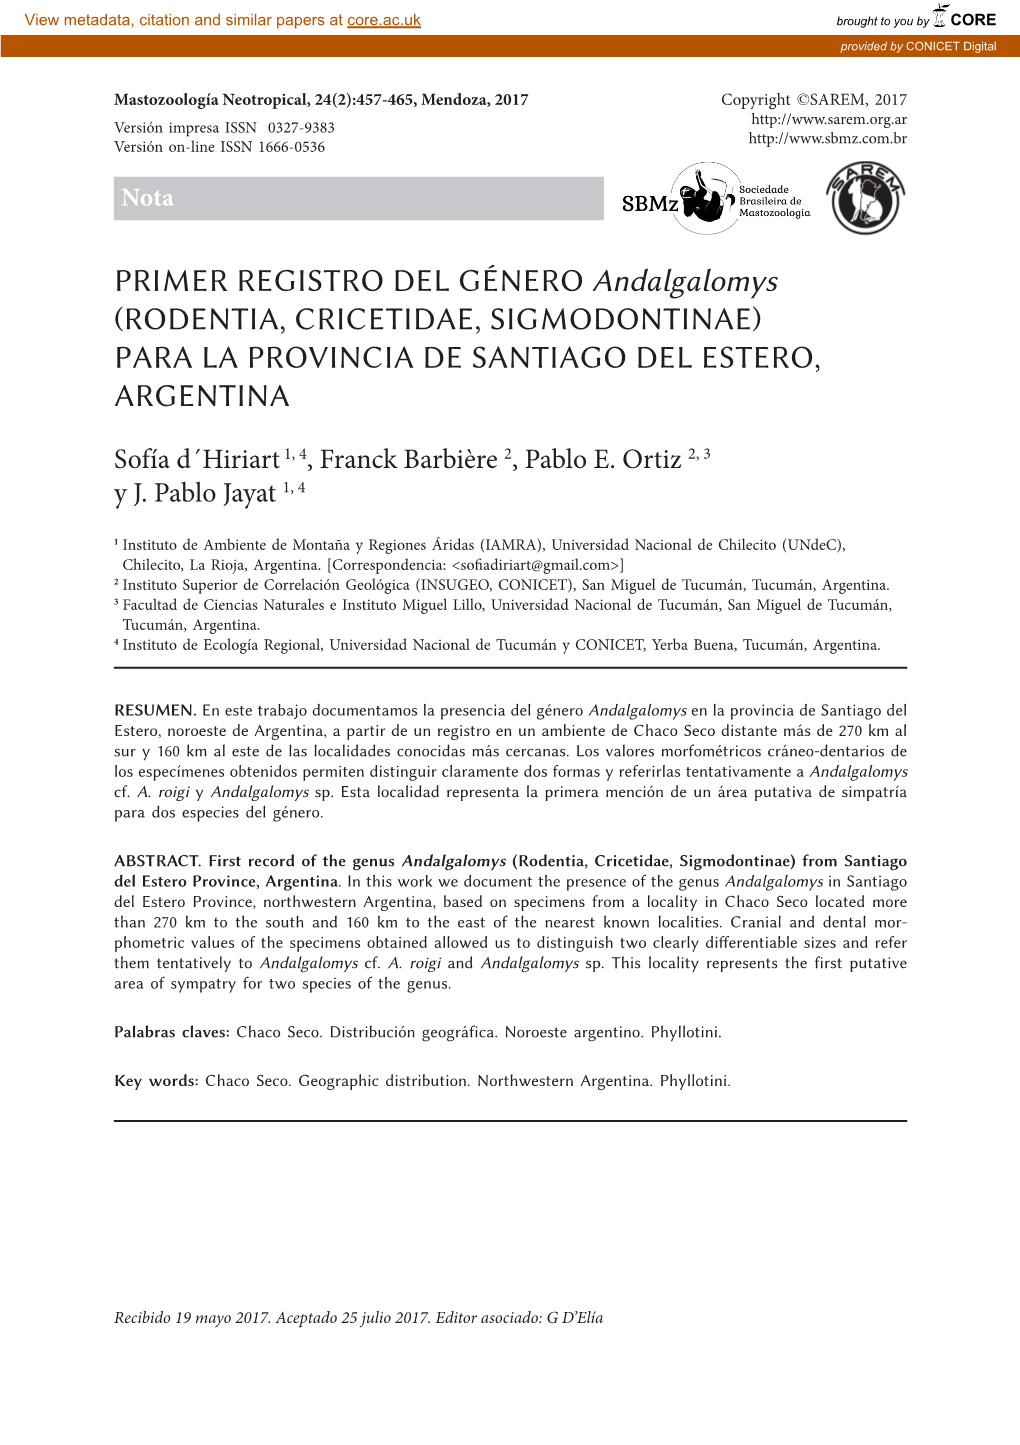 PRIMER REGISTRO DEL GÉNERO Andalgalomys (RODENTIA, CRICETIDAE, SIGMODONTINAE) PARA LA PROVINCIA DE SANTIAGO DEL ESTERO, ARGENTINA